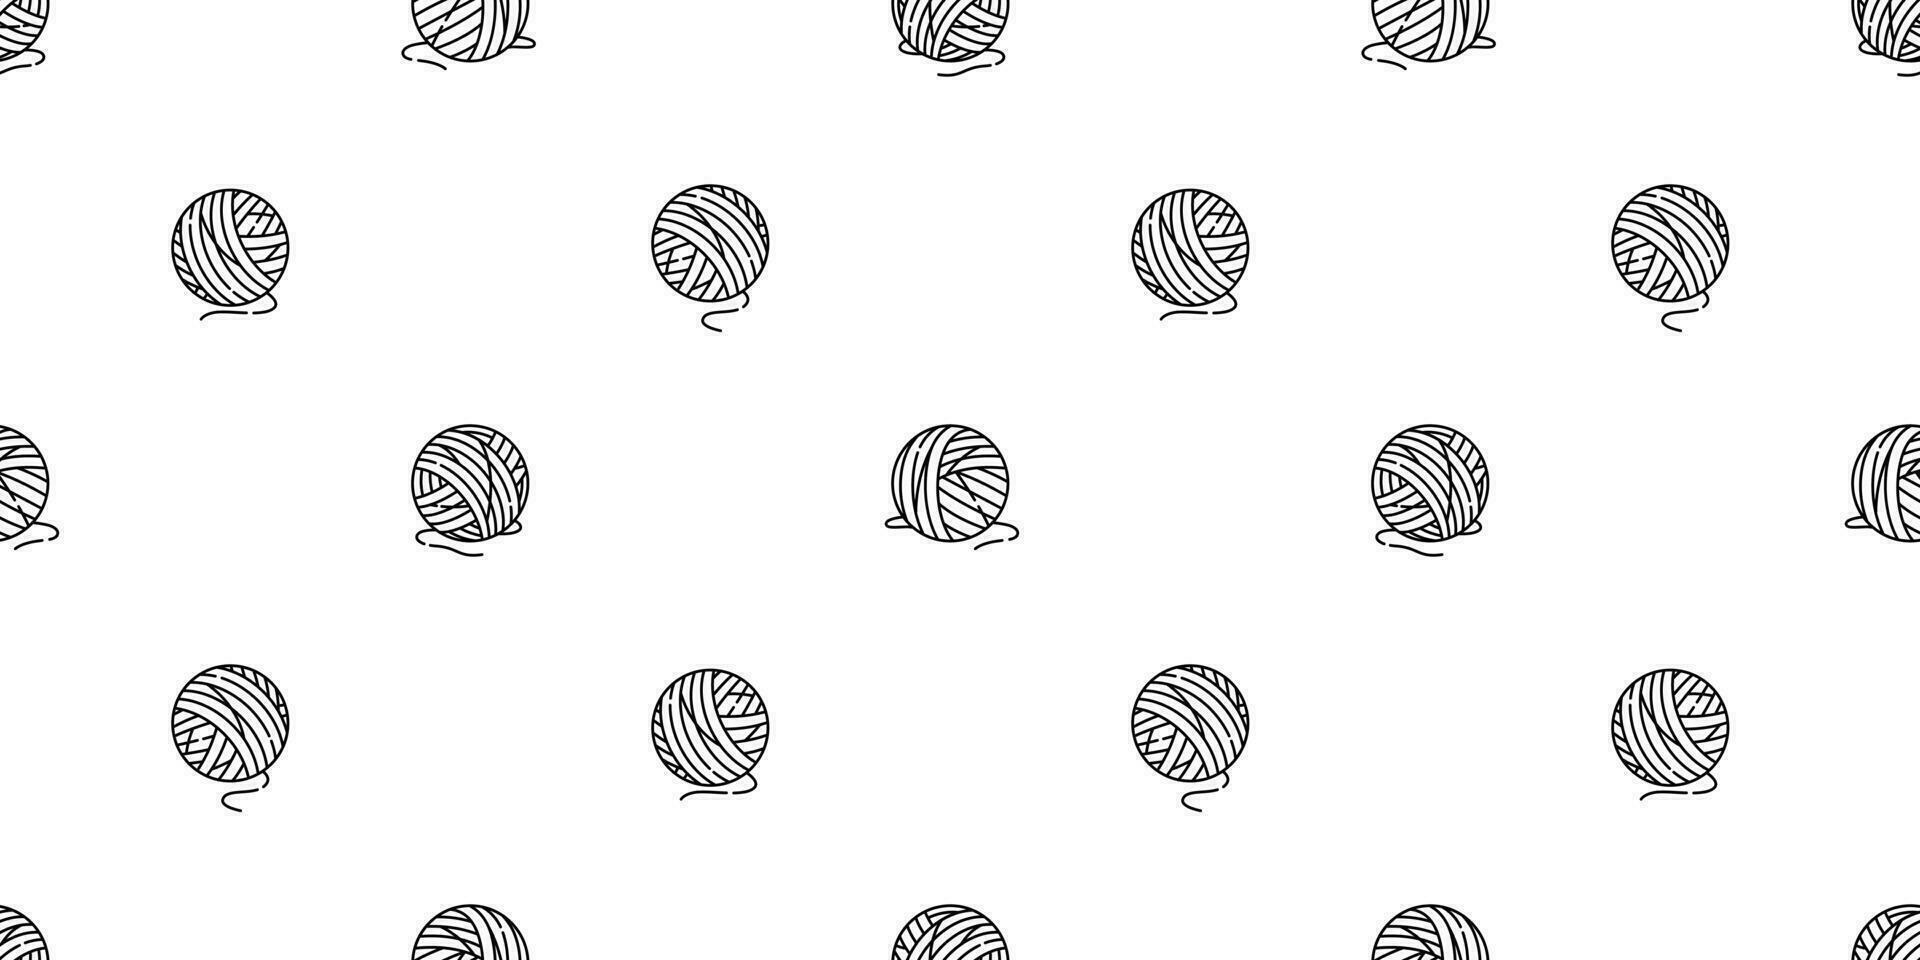 hilo pelota sin costura modelo vector pelotas de hilo tejido de punto agujas gato juguete repetir aislado fondo de pantalla loseta antecedentes dibujos animados ilustración garabatear